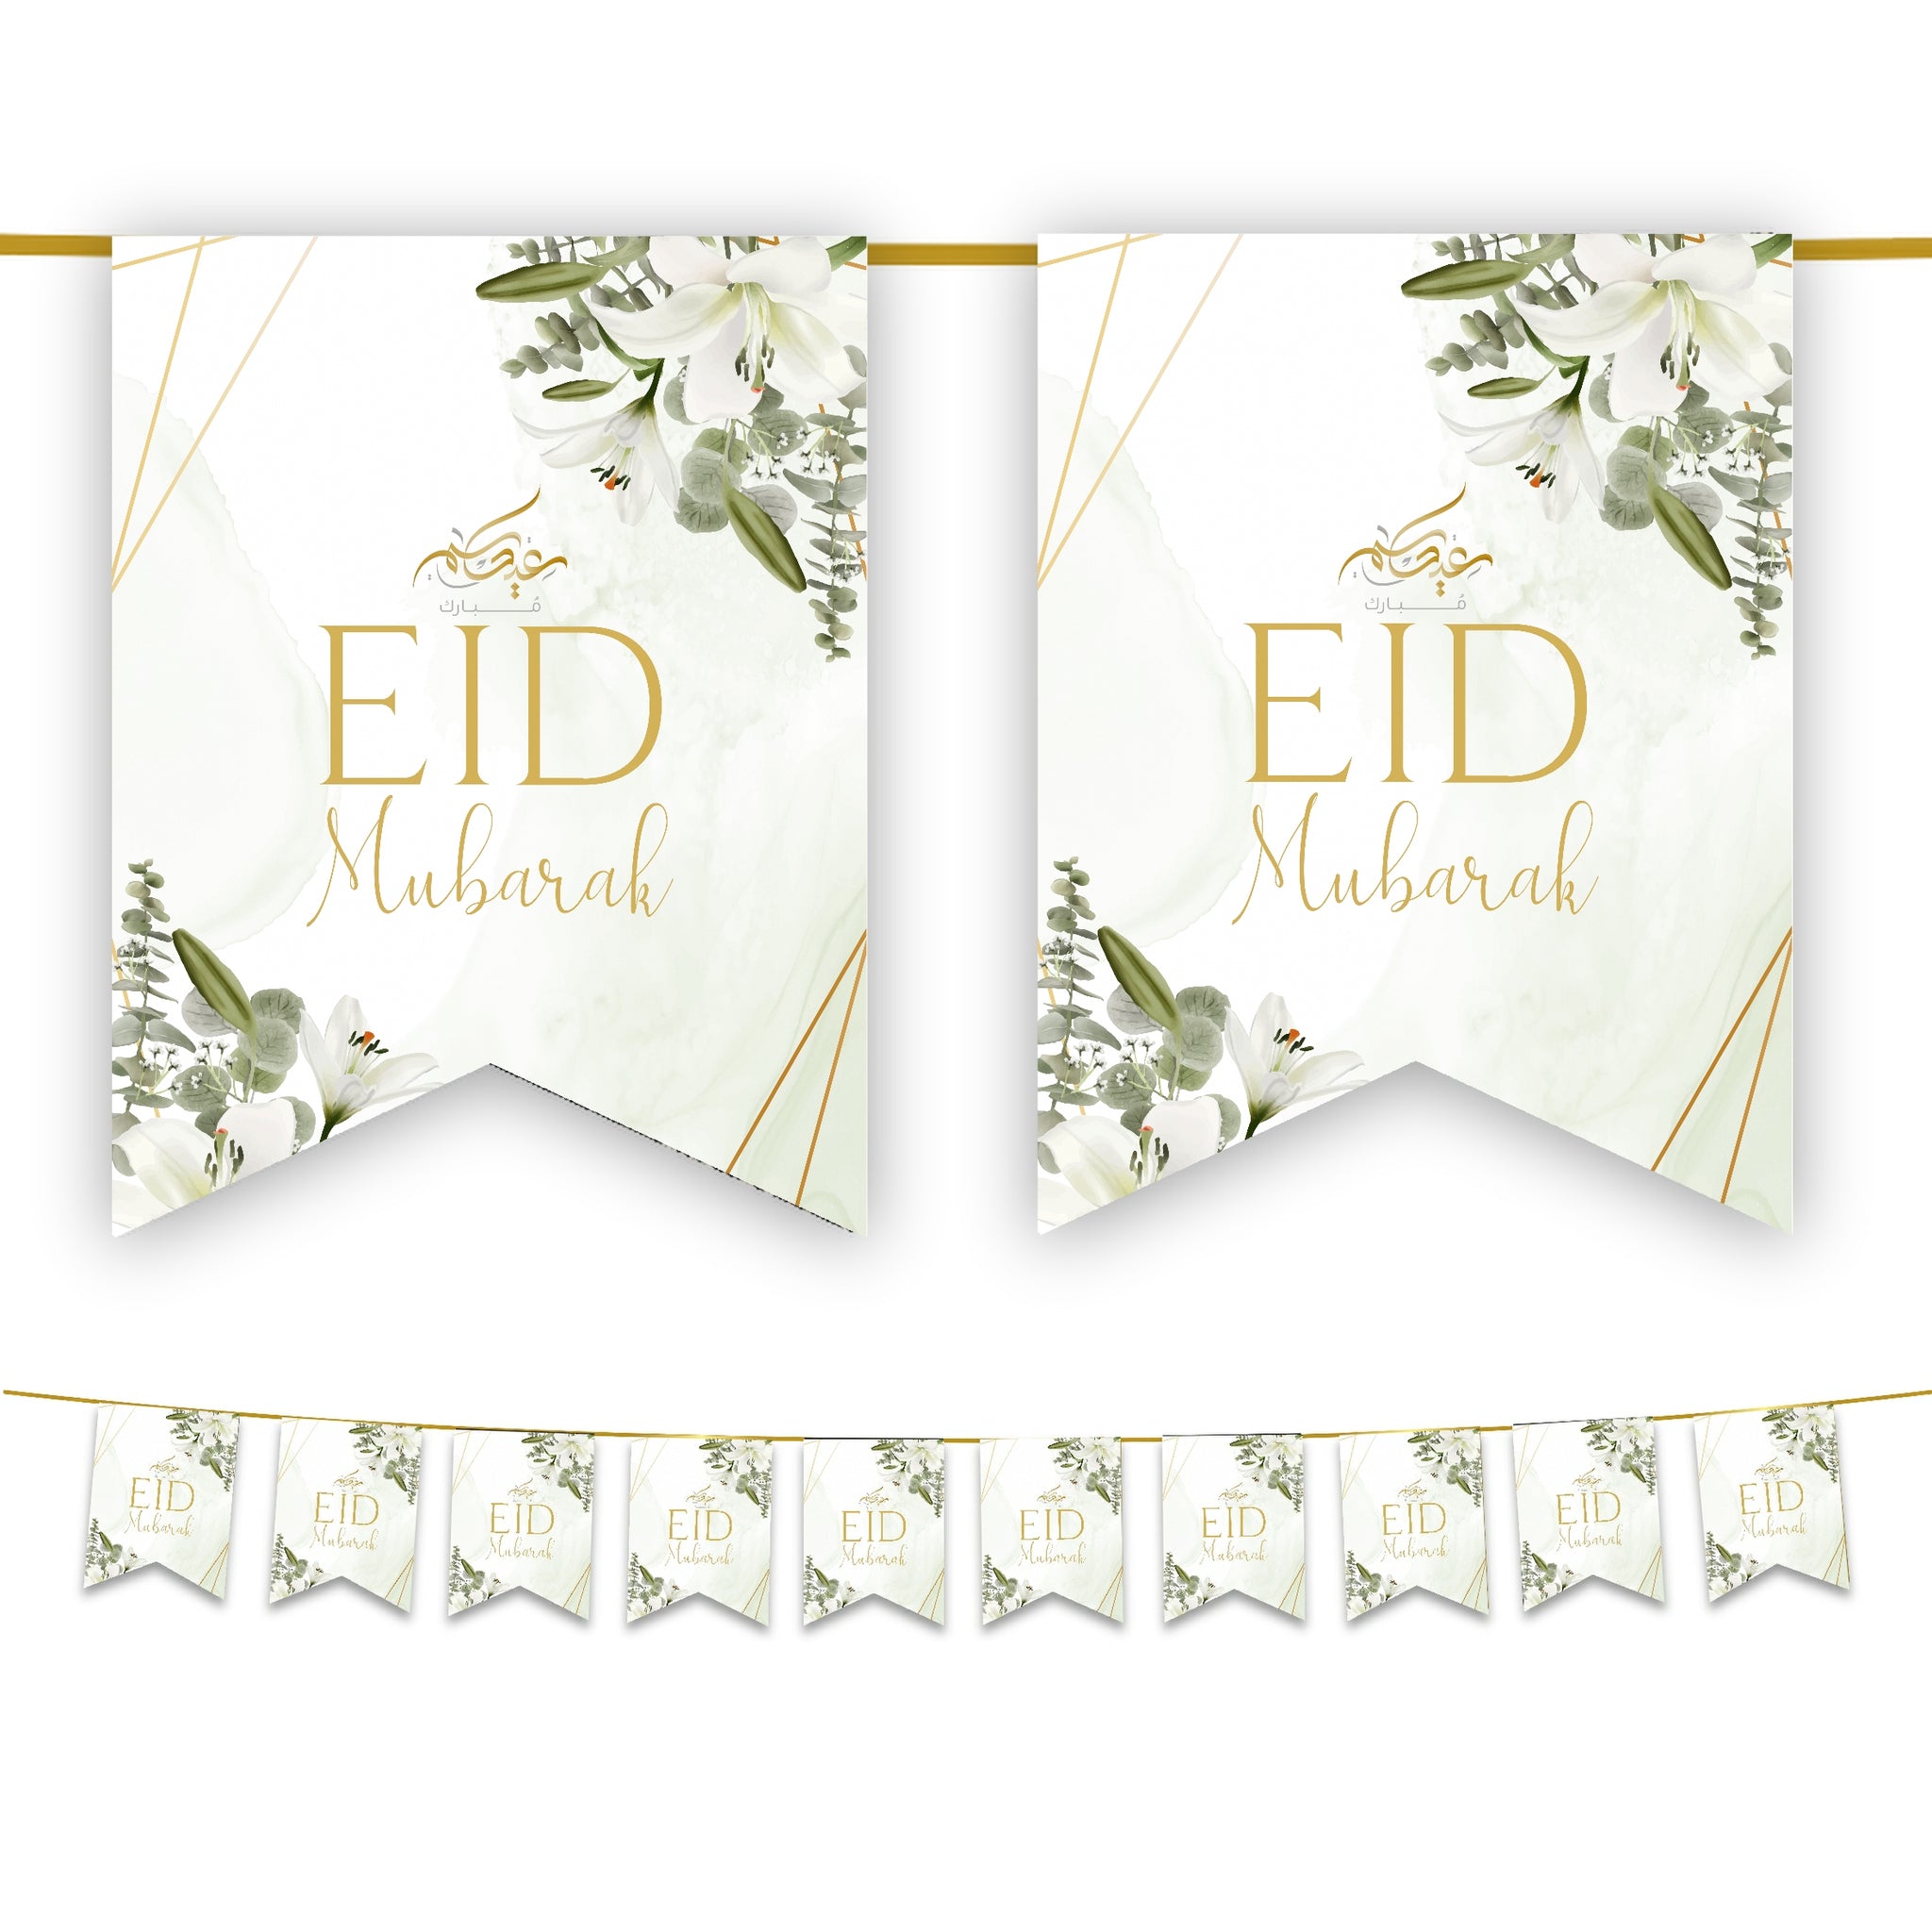 Eid Mubarak Bunting - White Gold & Green Leaves Flags Decoration